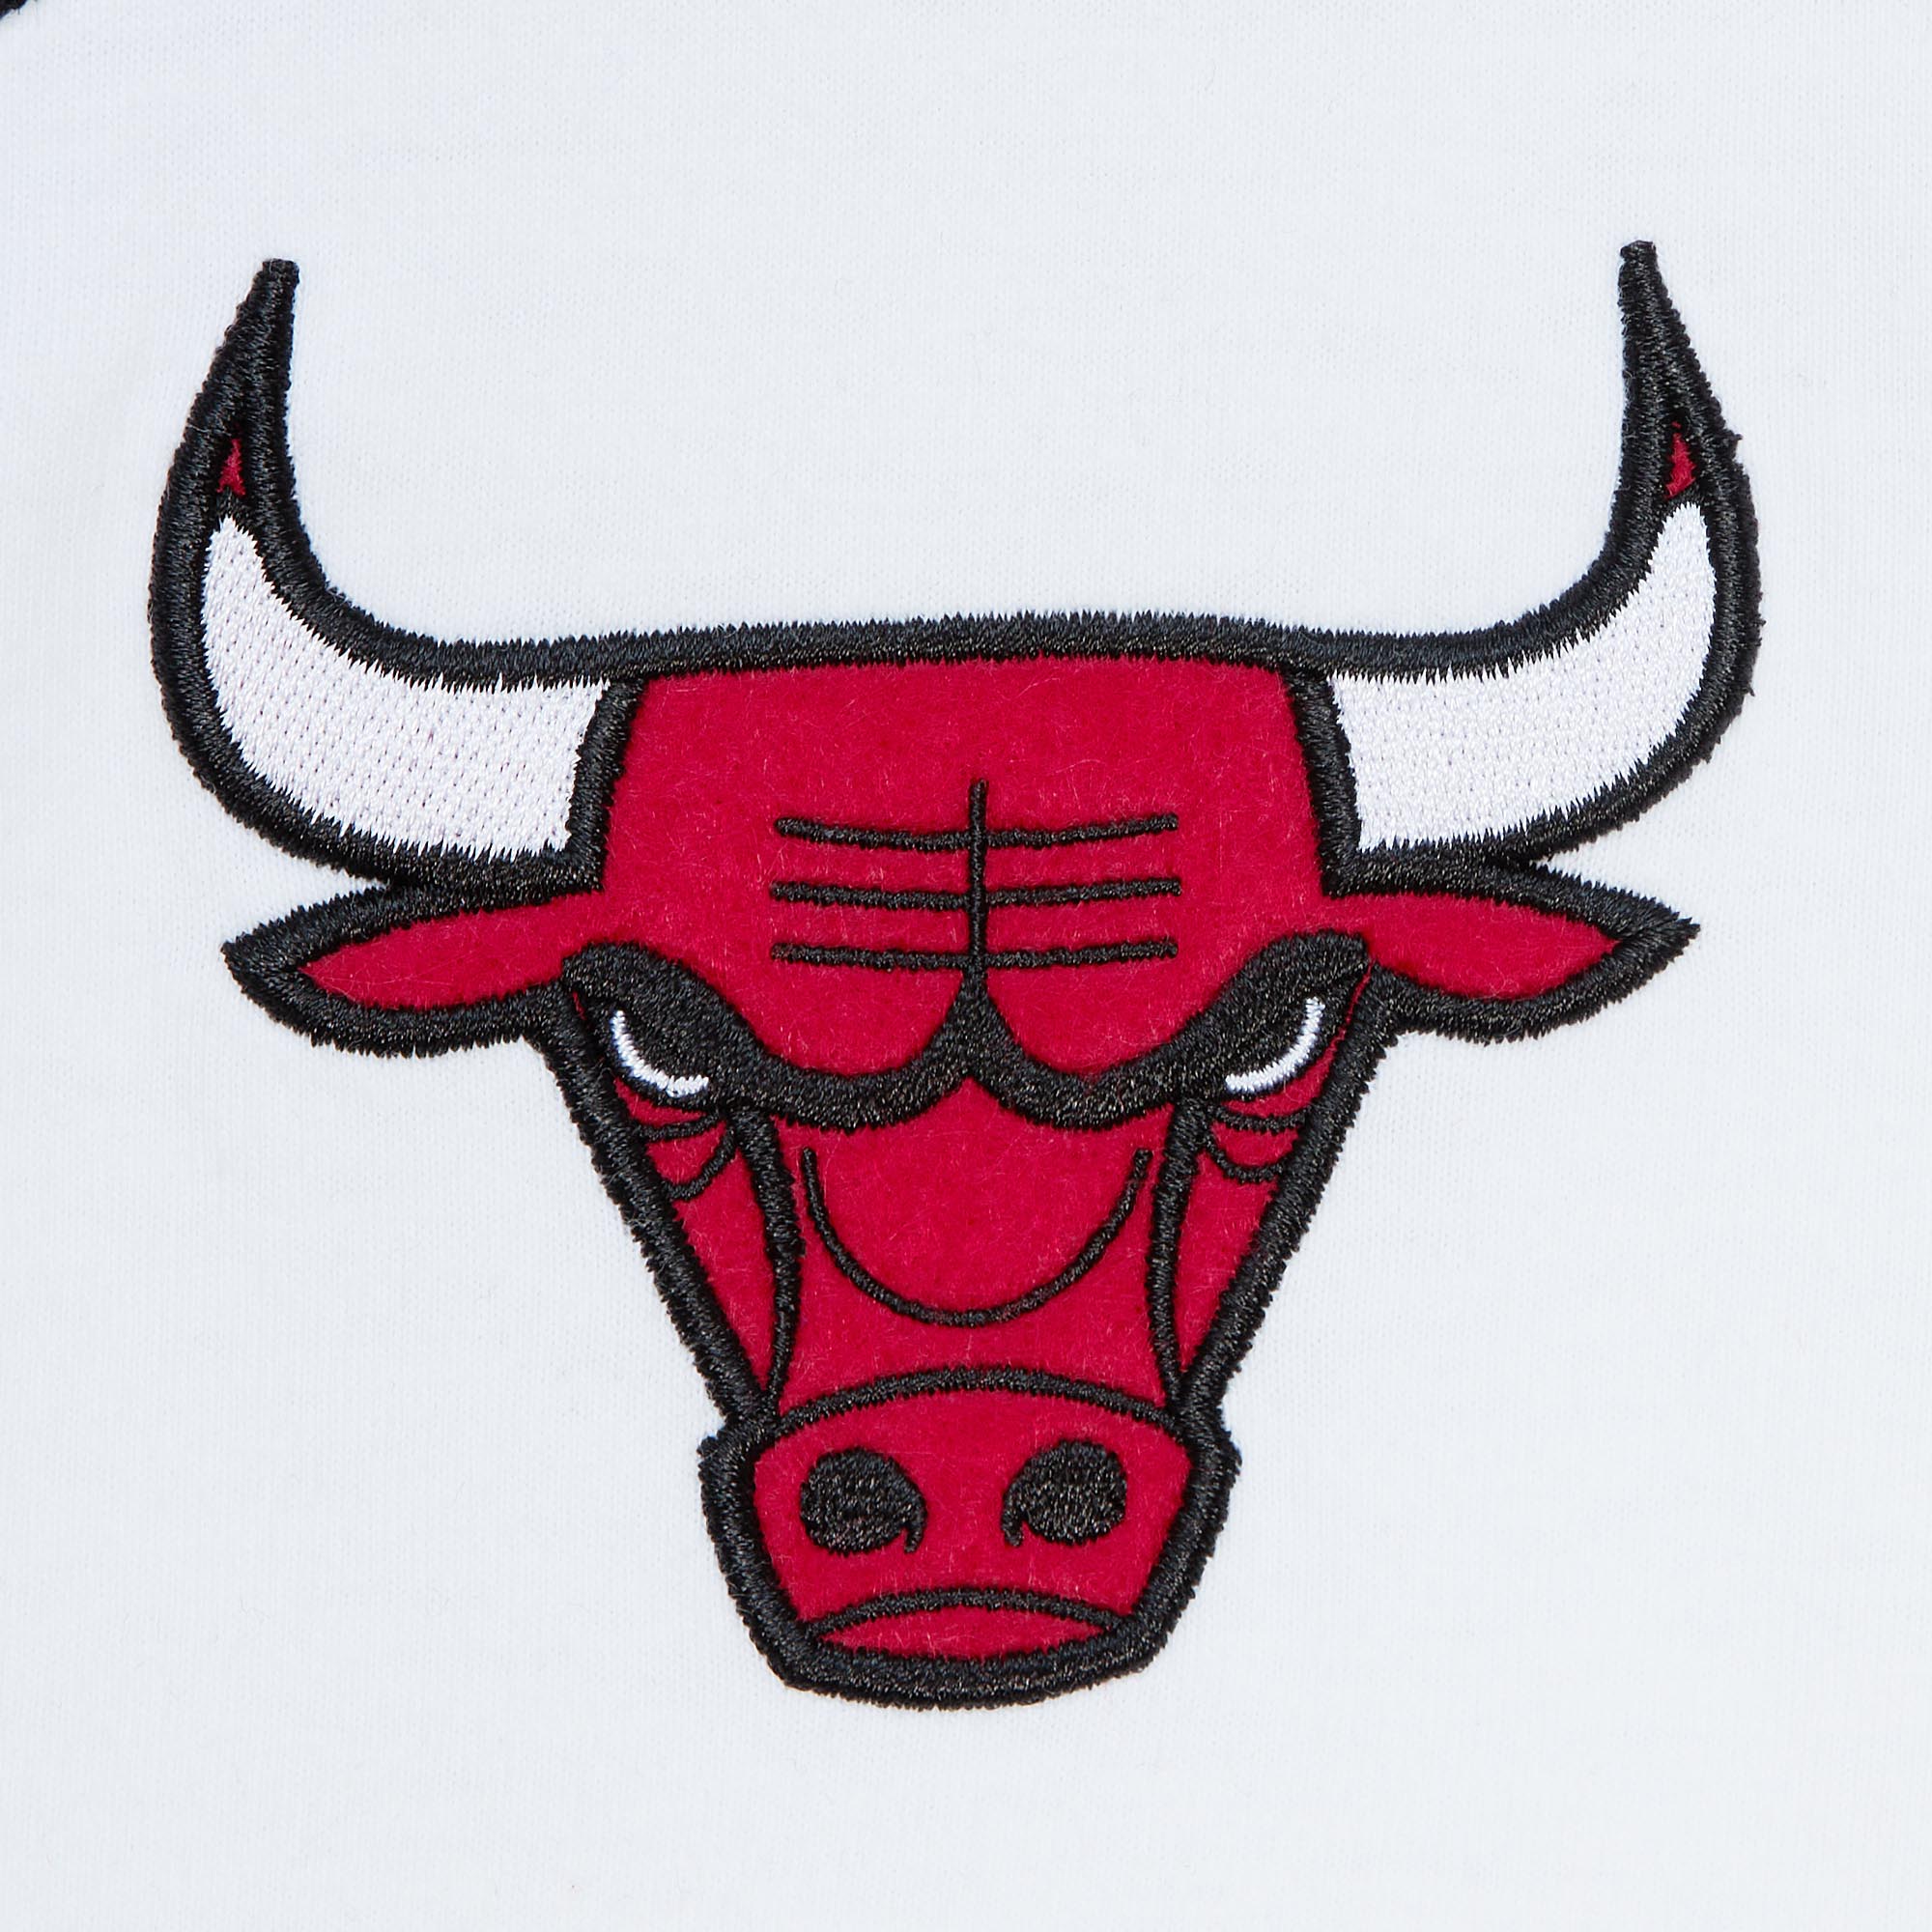 Pro Standard Men's Chicago Bulls Button Front Jersey - Black